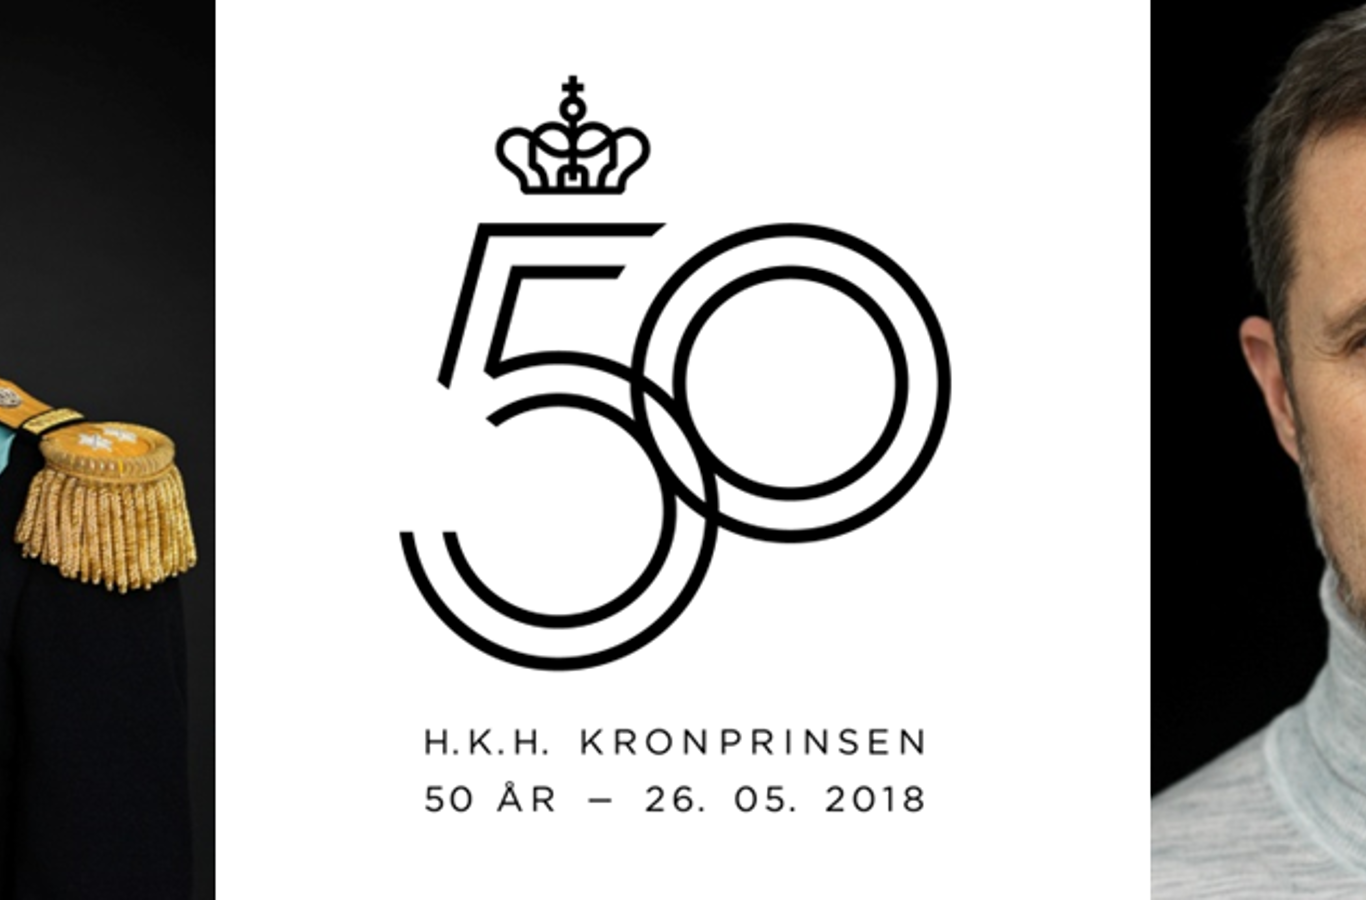 Kronprinsens 50-års fødselsdag